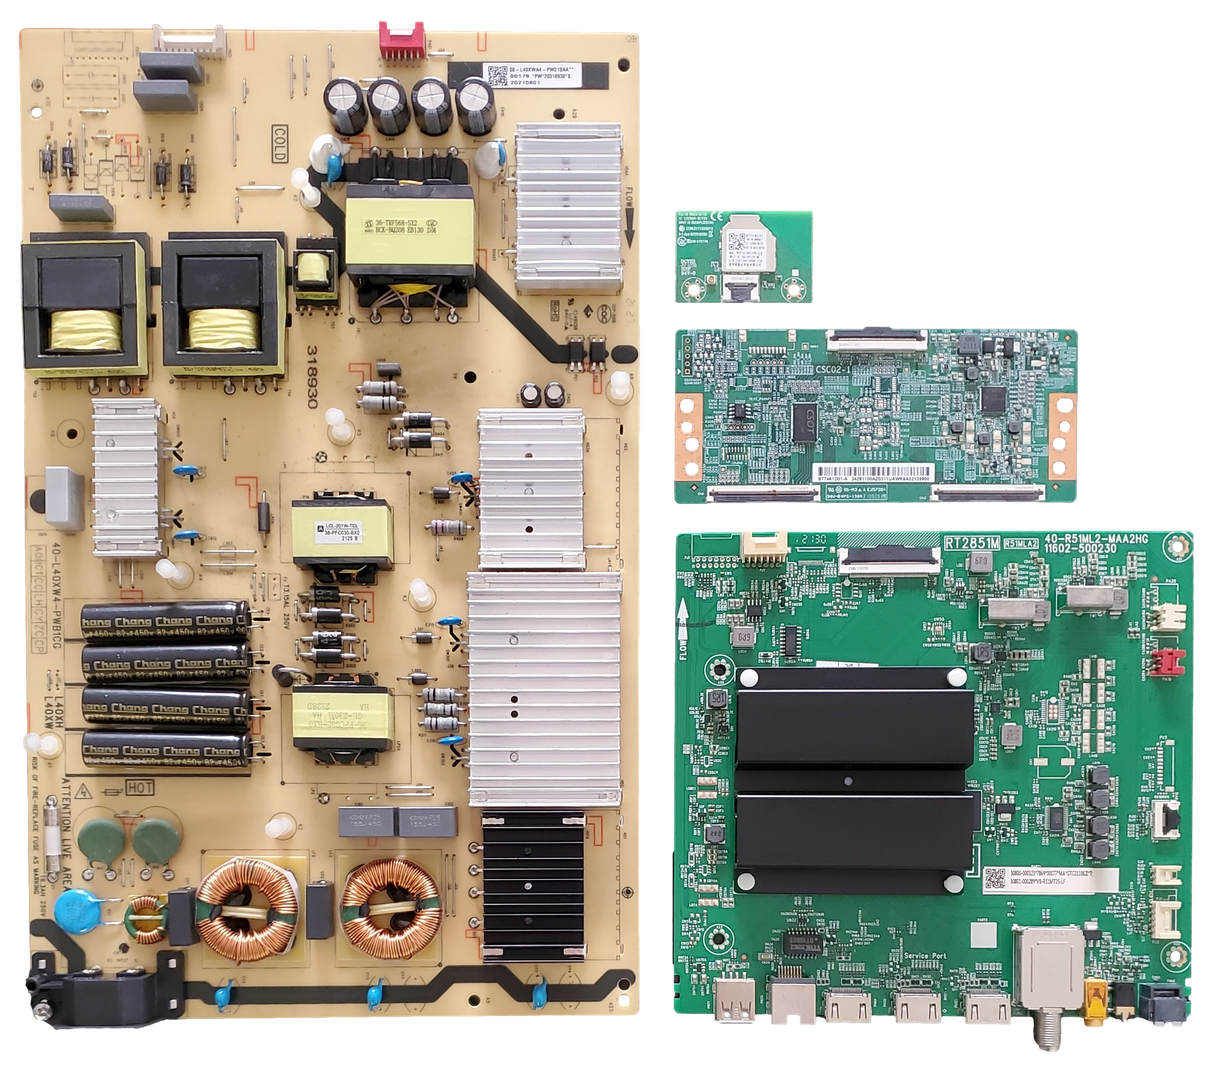 75S446 TCL TV Repair Parts Kit, 30800-000323 Main Board, 08-L40XWA4-PW210AA Power Supply, 4T-TCN750-CS09 T-Con, 30130-000017 Wifi, 75S446